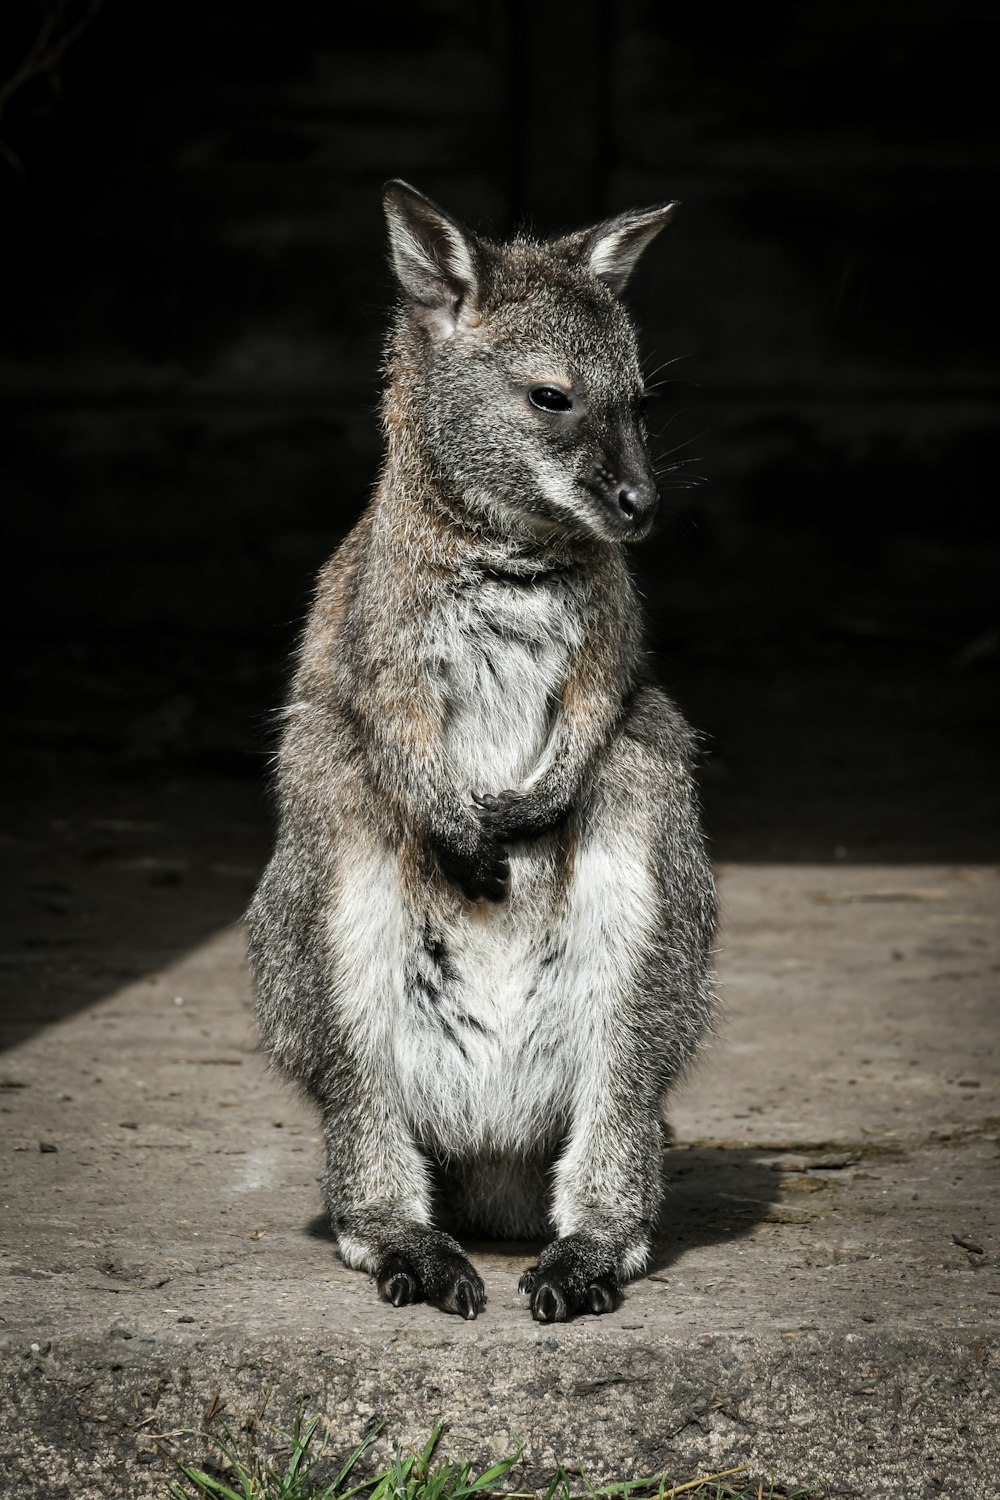 a kangaroo sitting on the ground